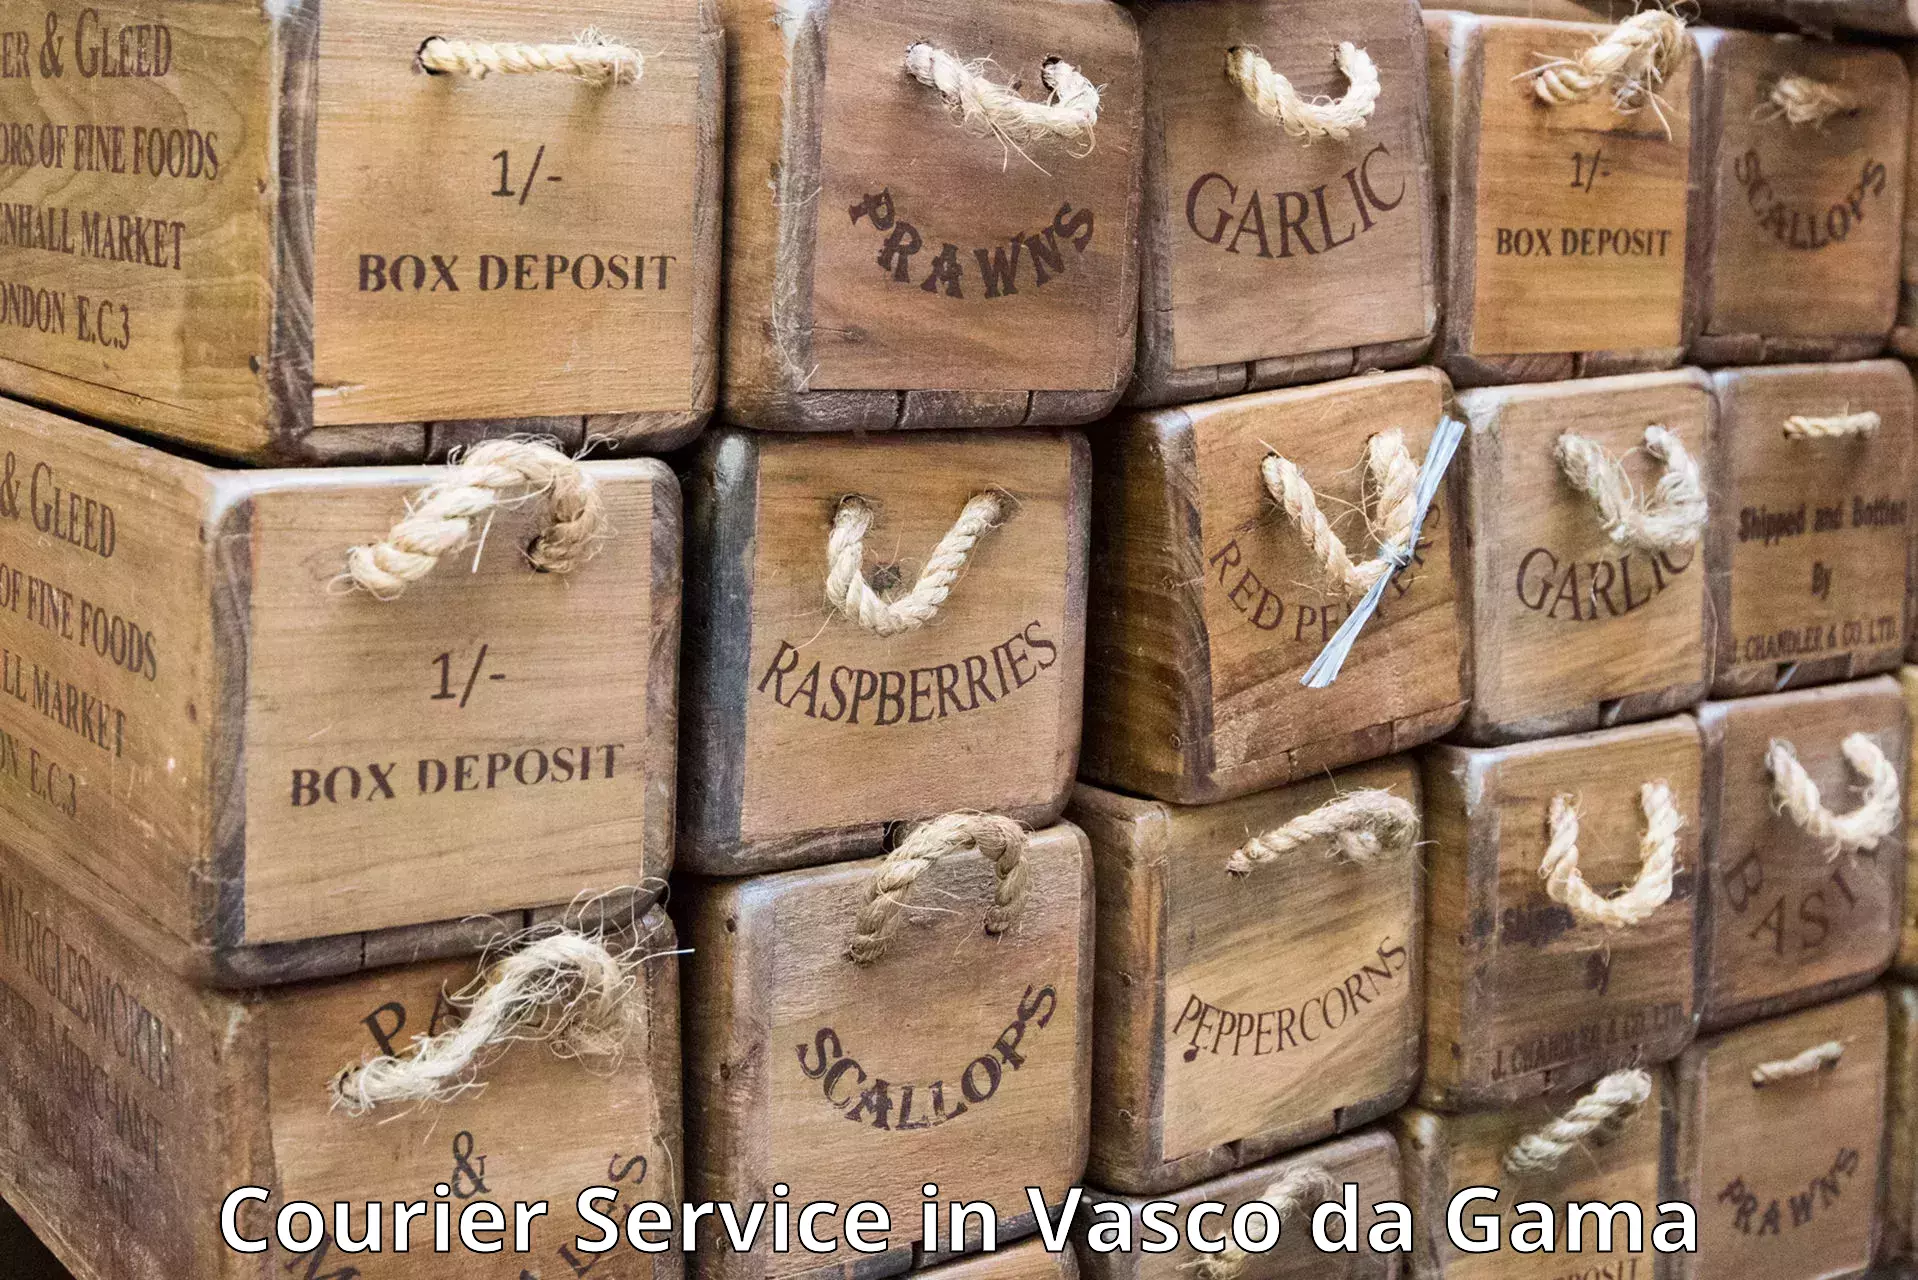 24-hour courier service in Vasco da Gama